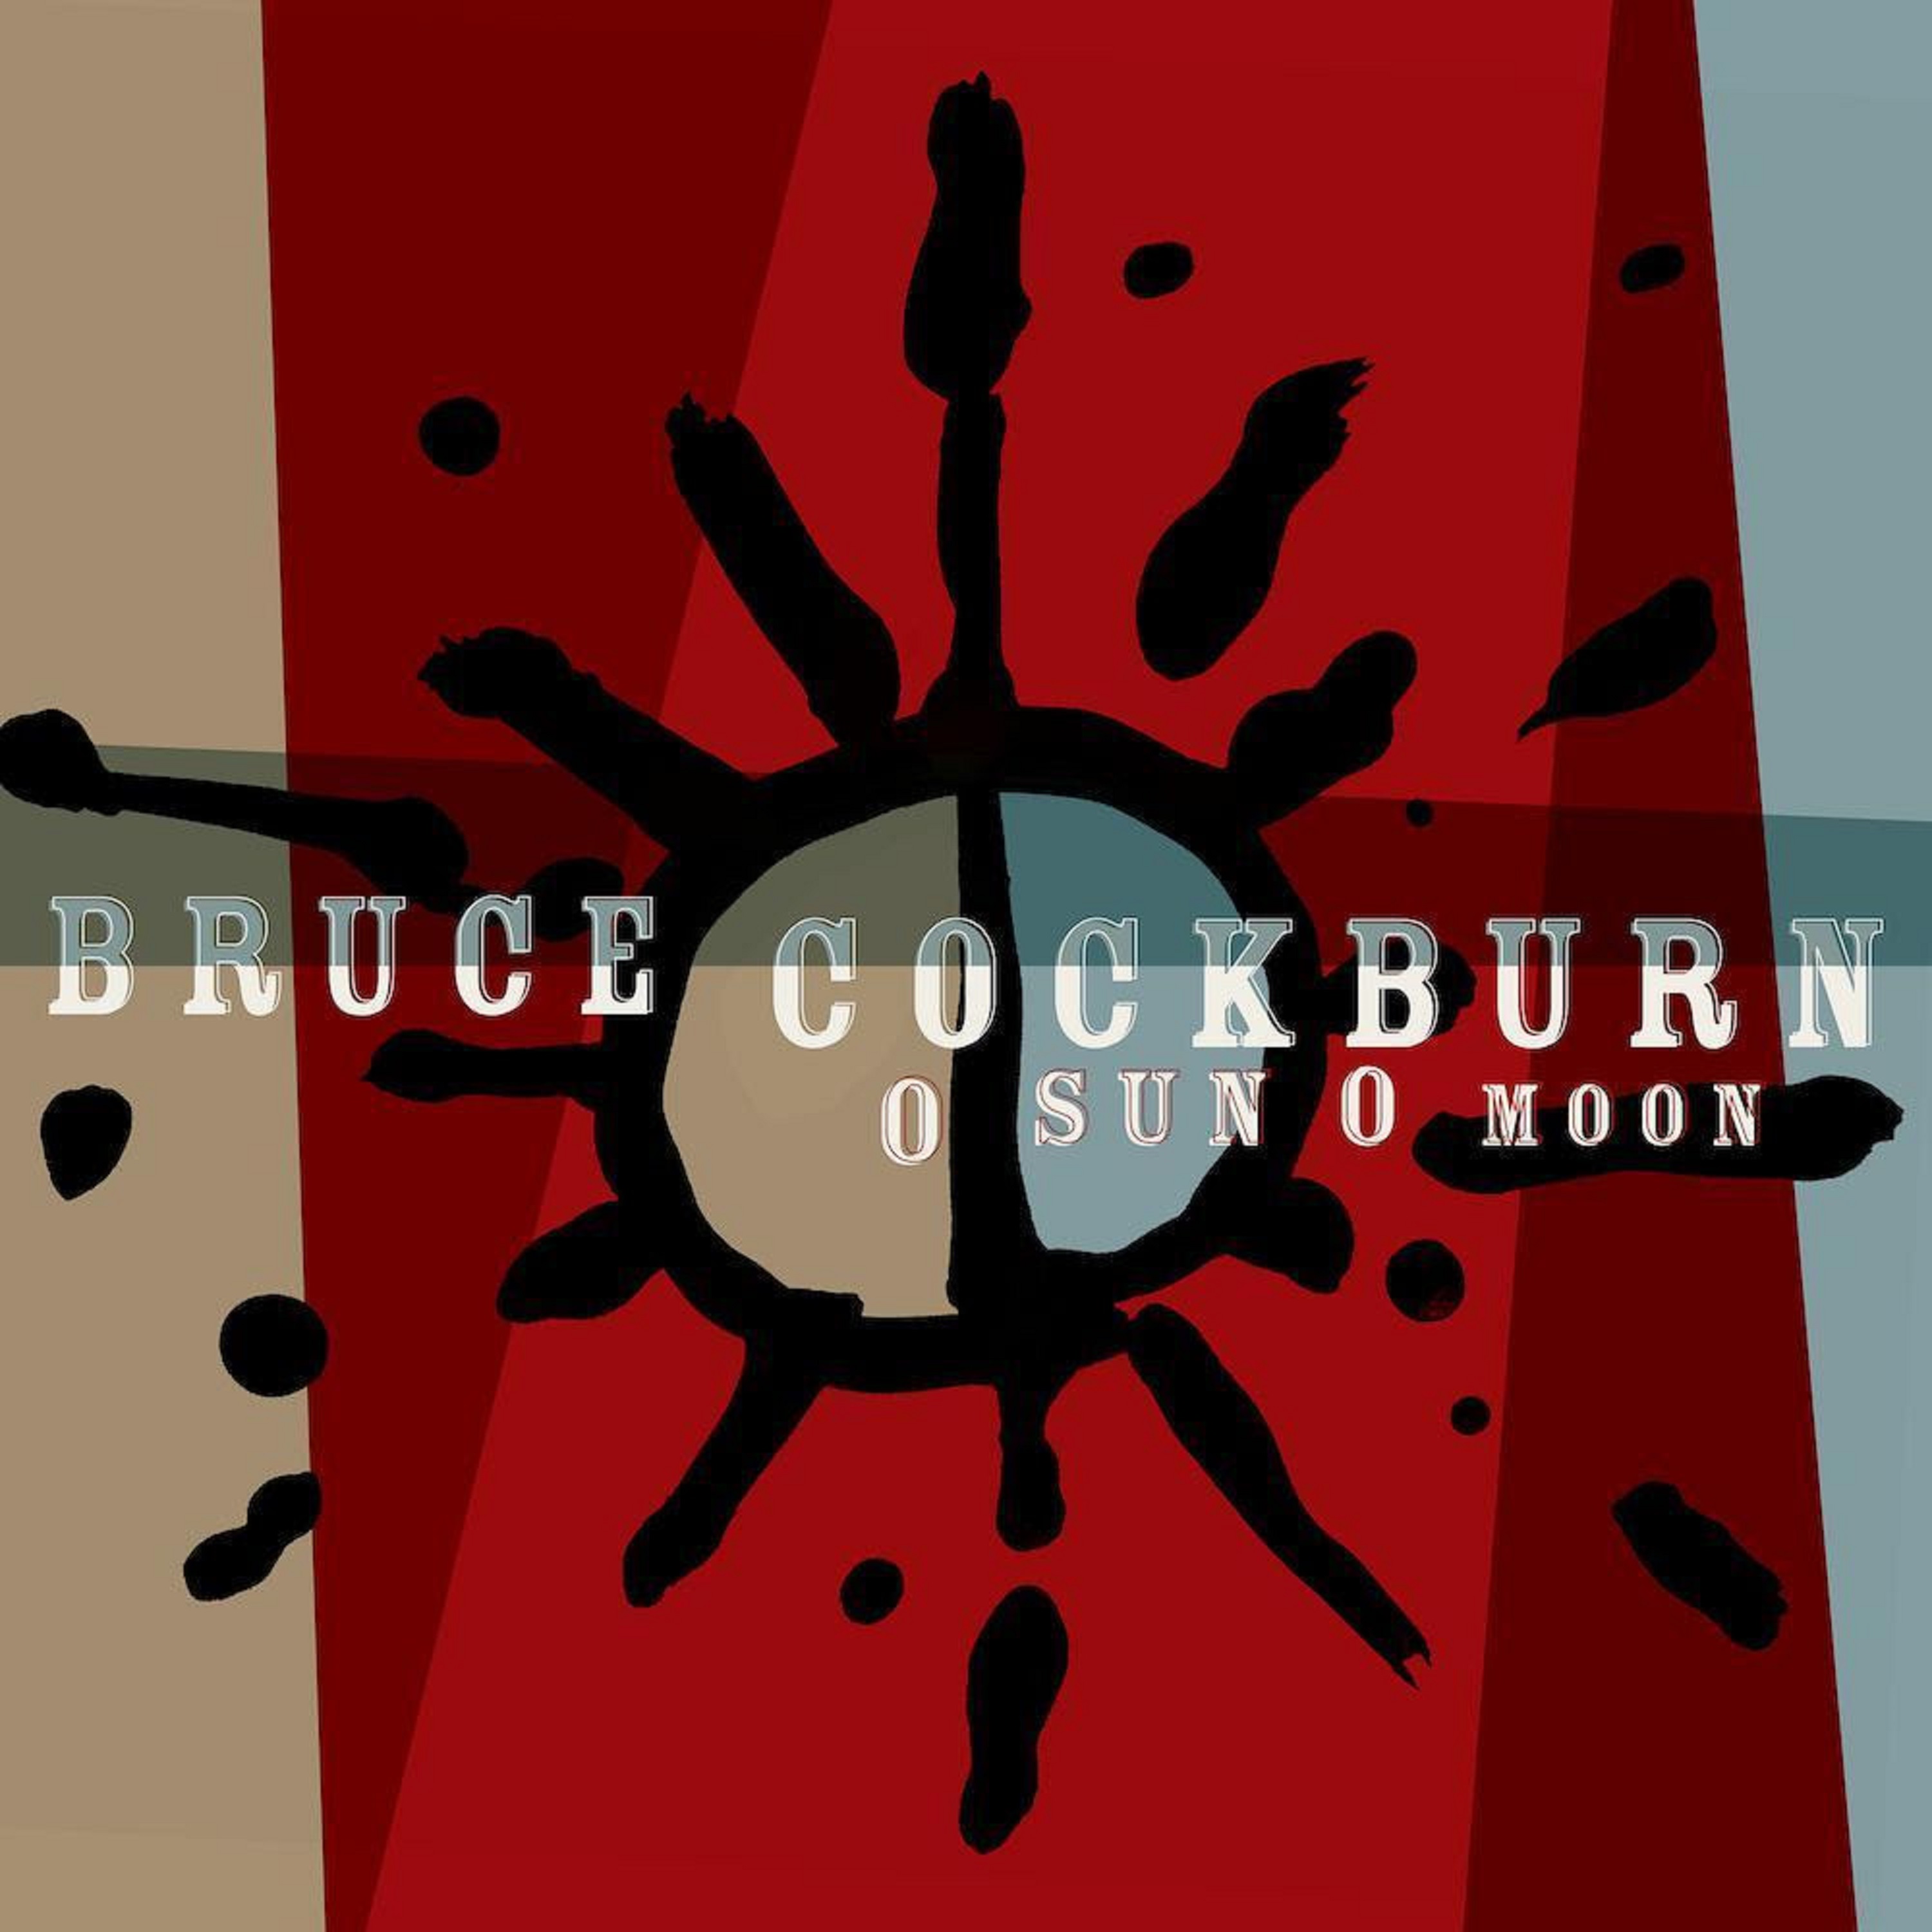 Bruce Cockburn's new album O Sun O Moon out now